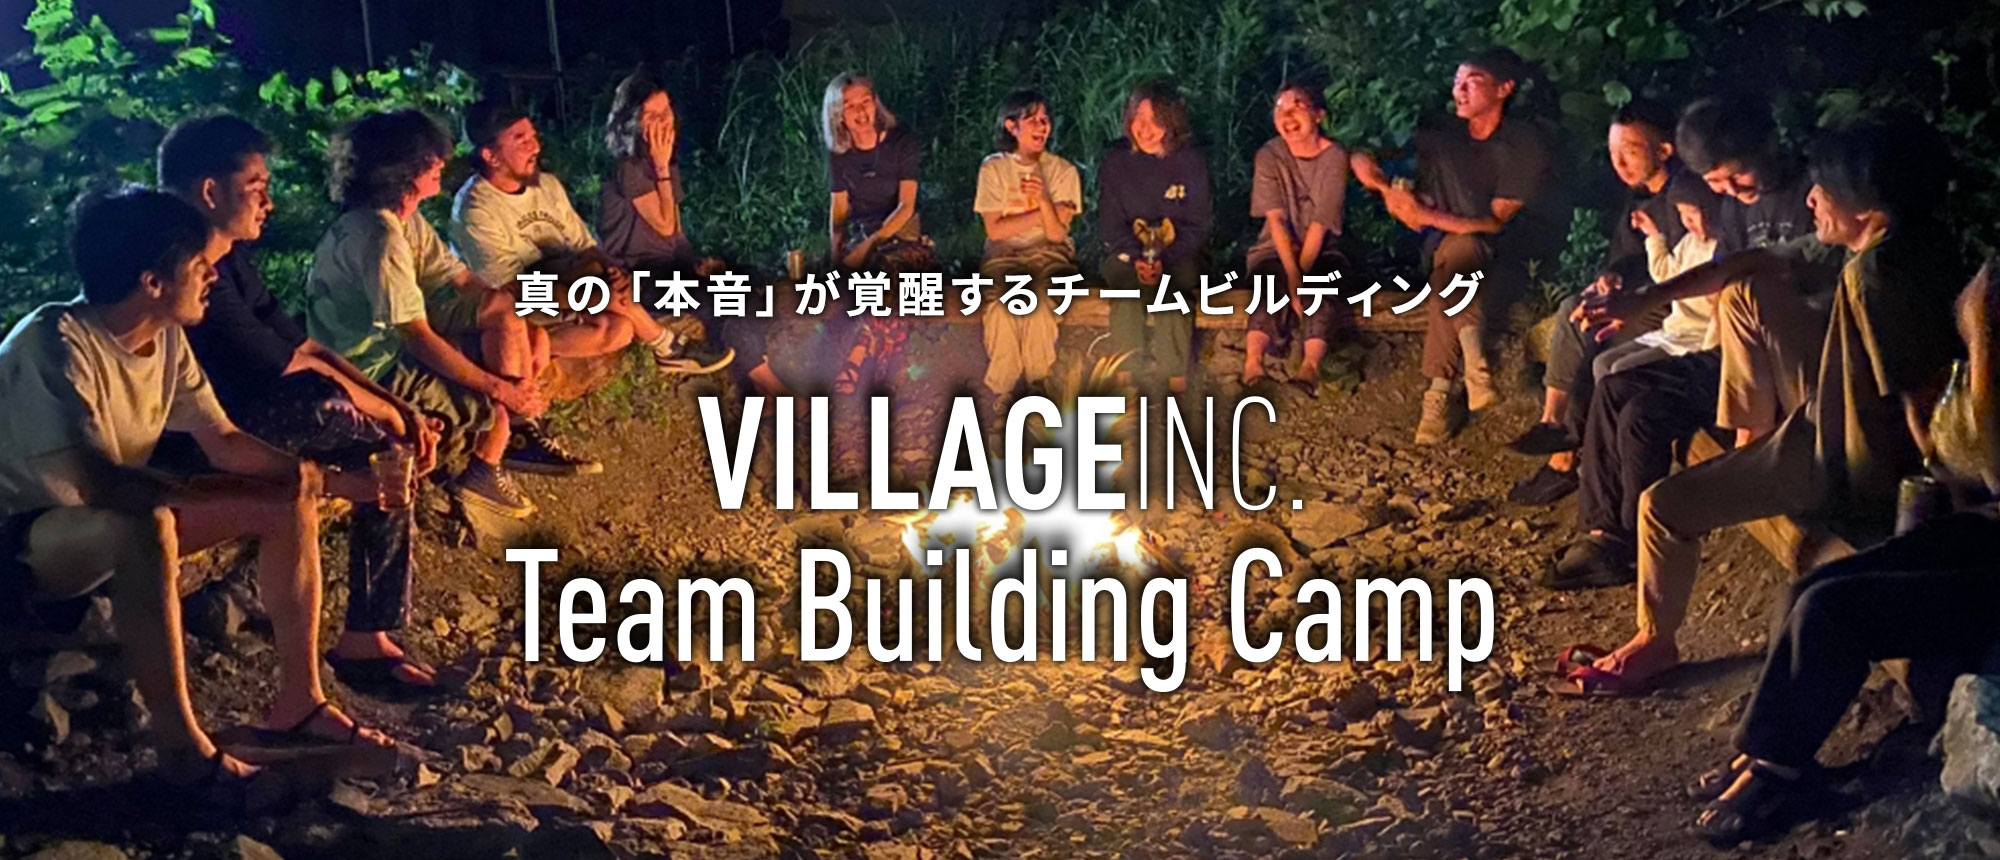 Team Building Camp VILLAGE INC.